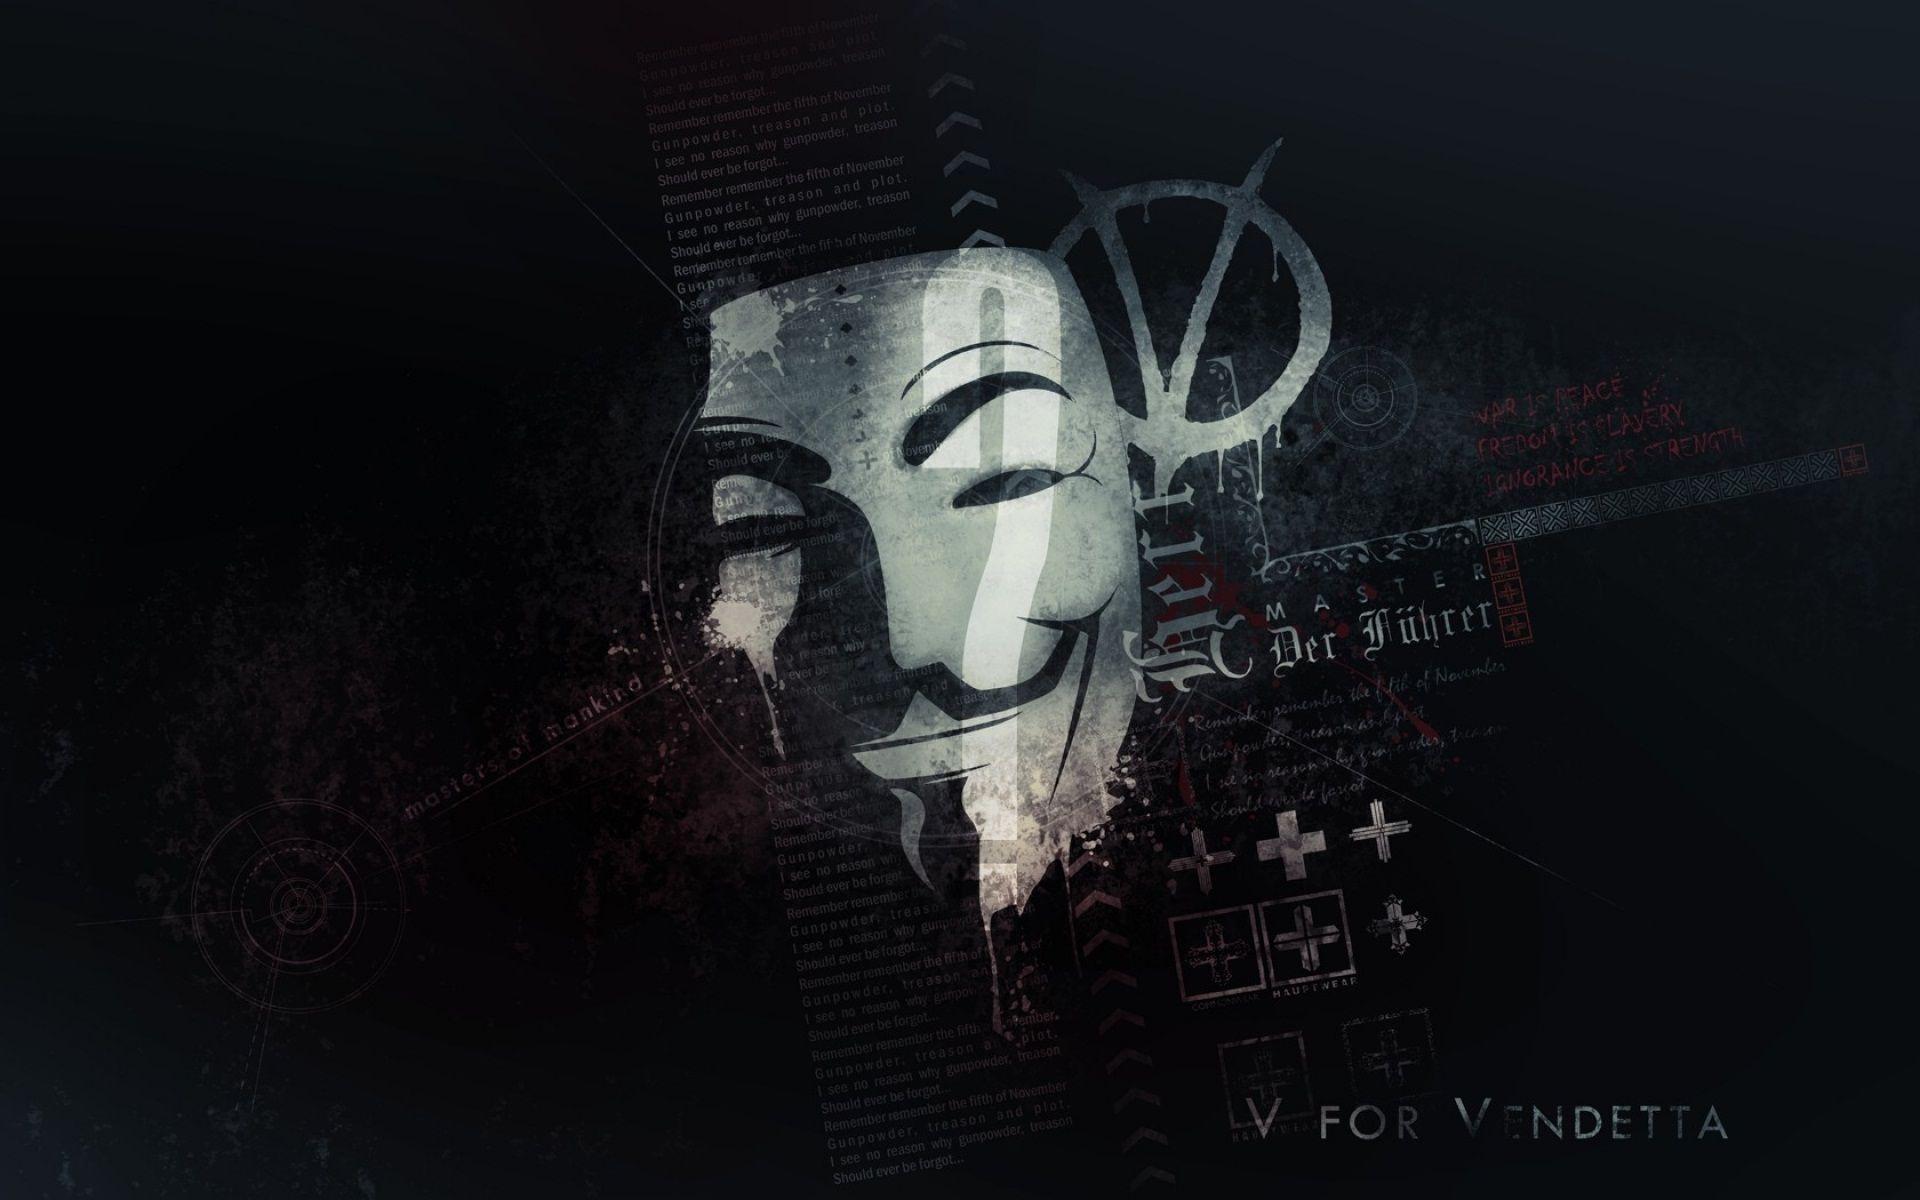 anonymous mask wallpaper